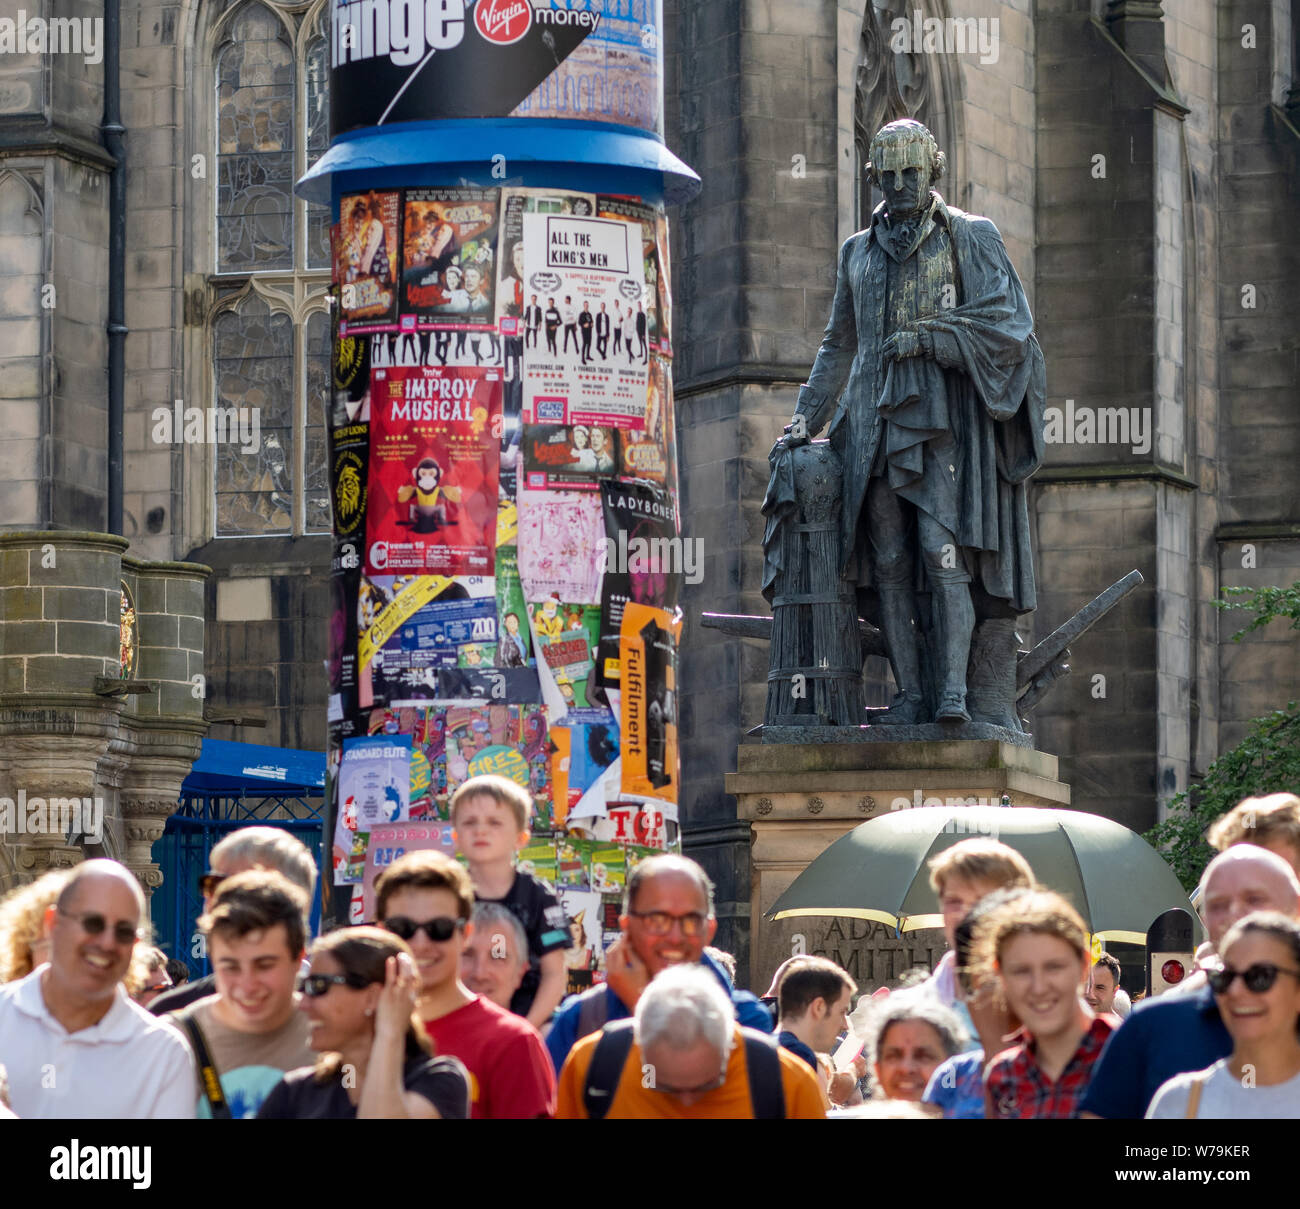 The statue of Adam Smith looks down on revellers at the Edinburgh Festival Fringe 2019 - The Royal Mile, Edinburgh, Scotland, UK. Stock Photo